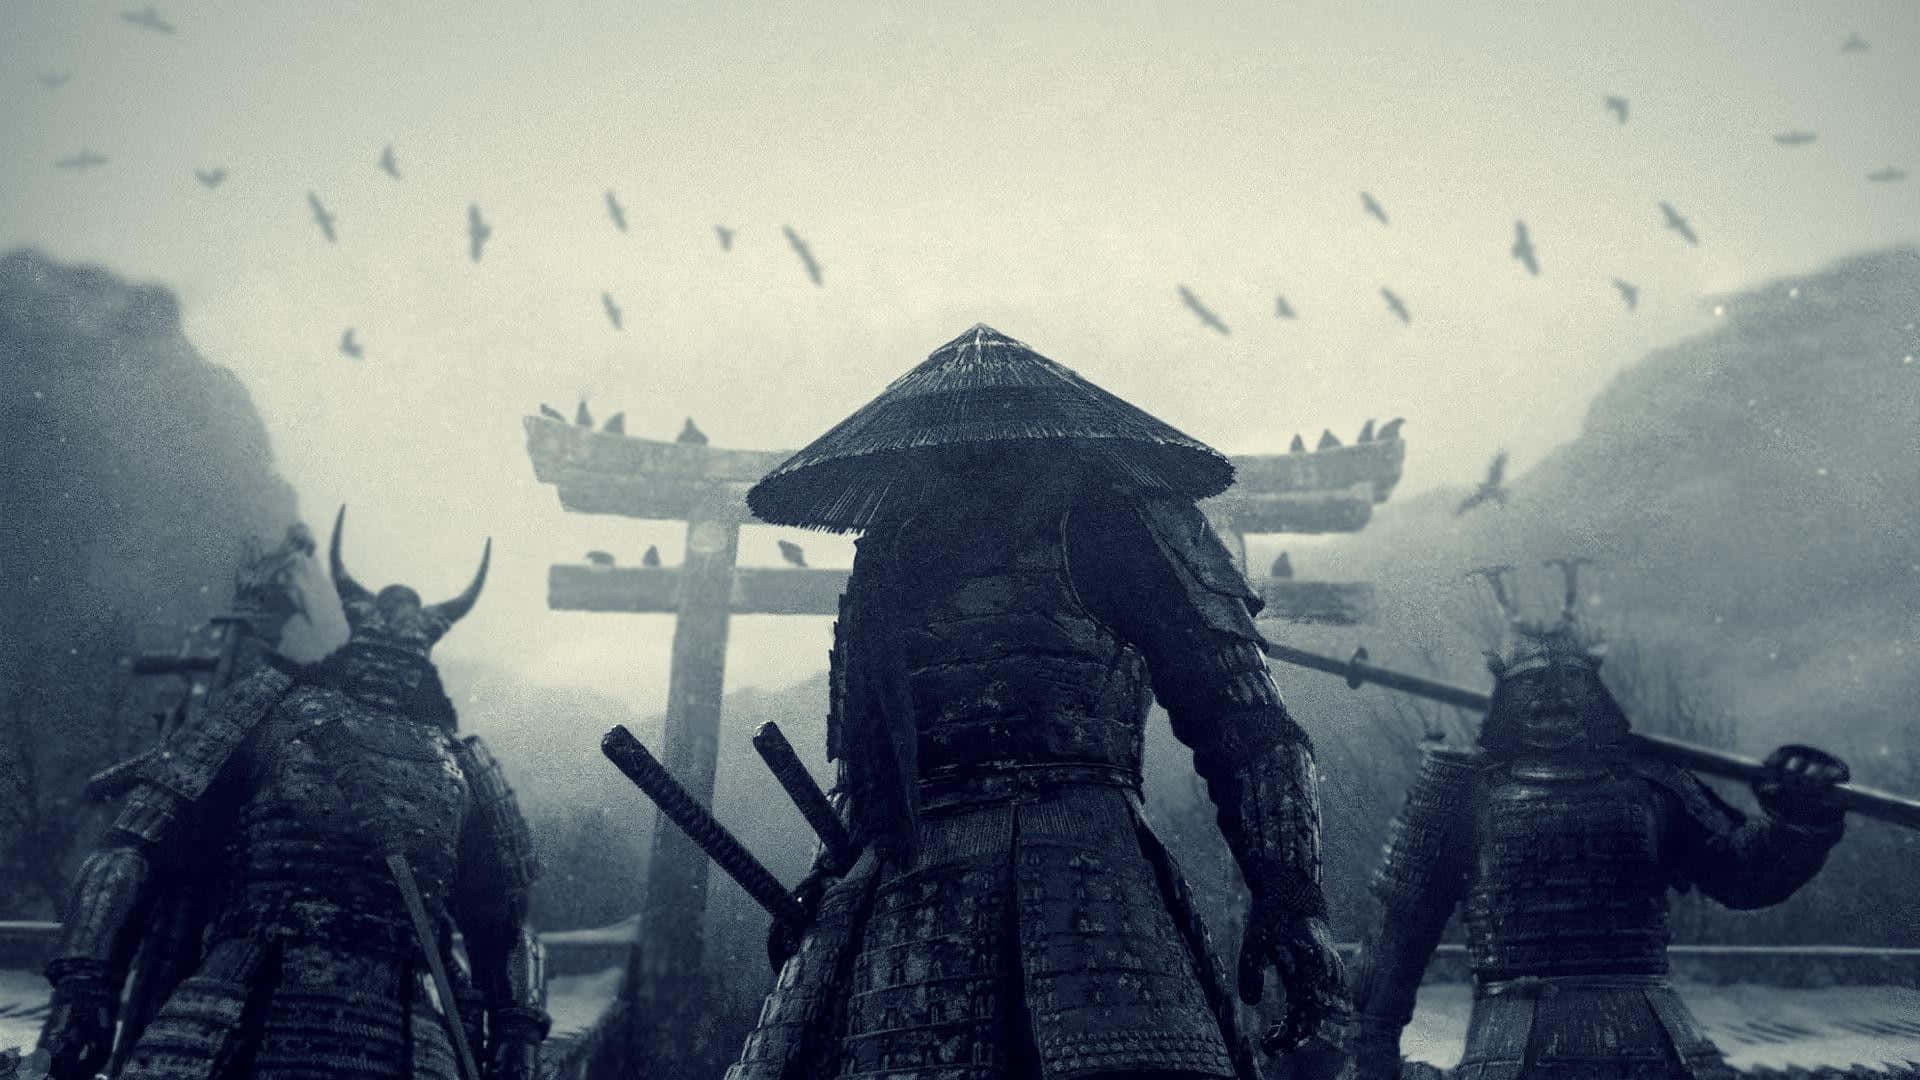 "The strength and power of the legendary Samurai X become legendary"